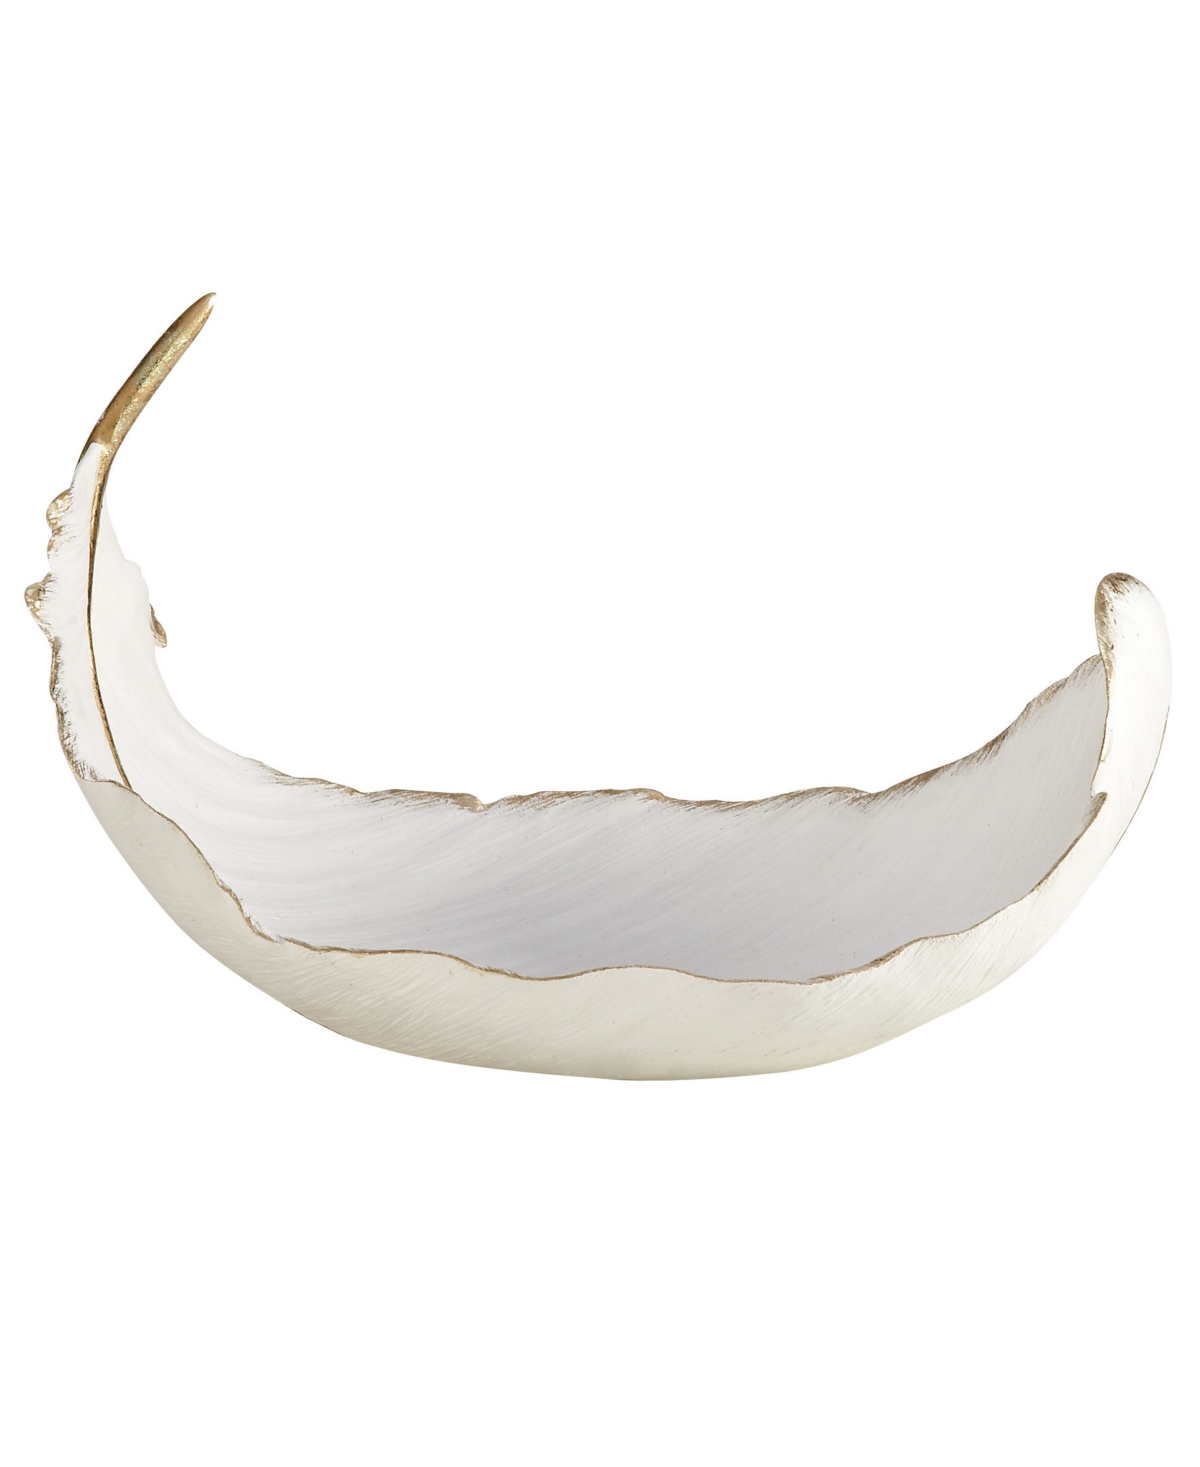 by Cosmopolitan White Resin Glam Decorative Bowl, 8 x 13 x 8 - White